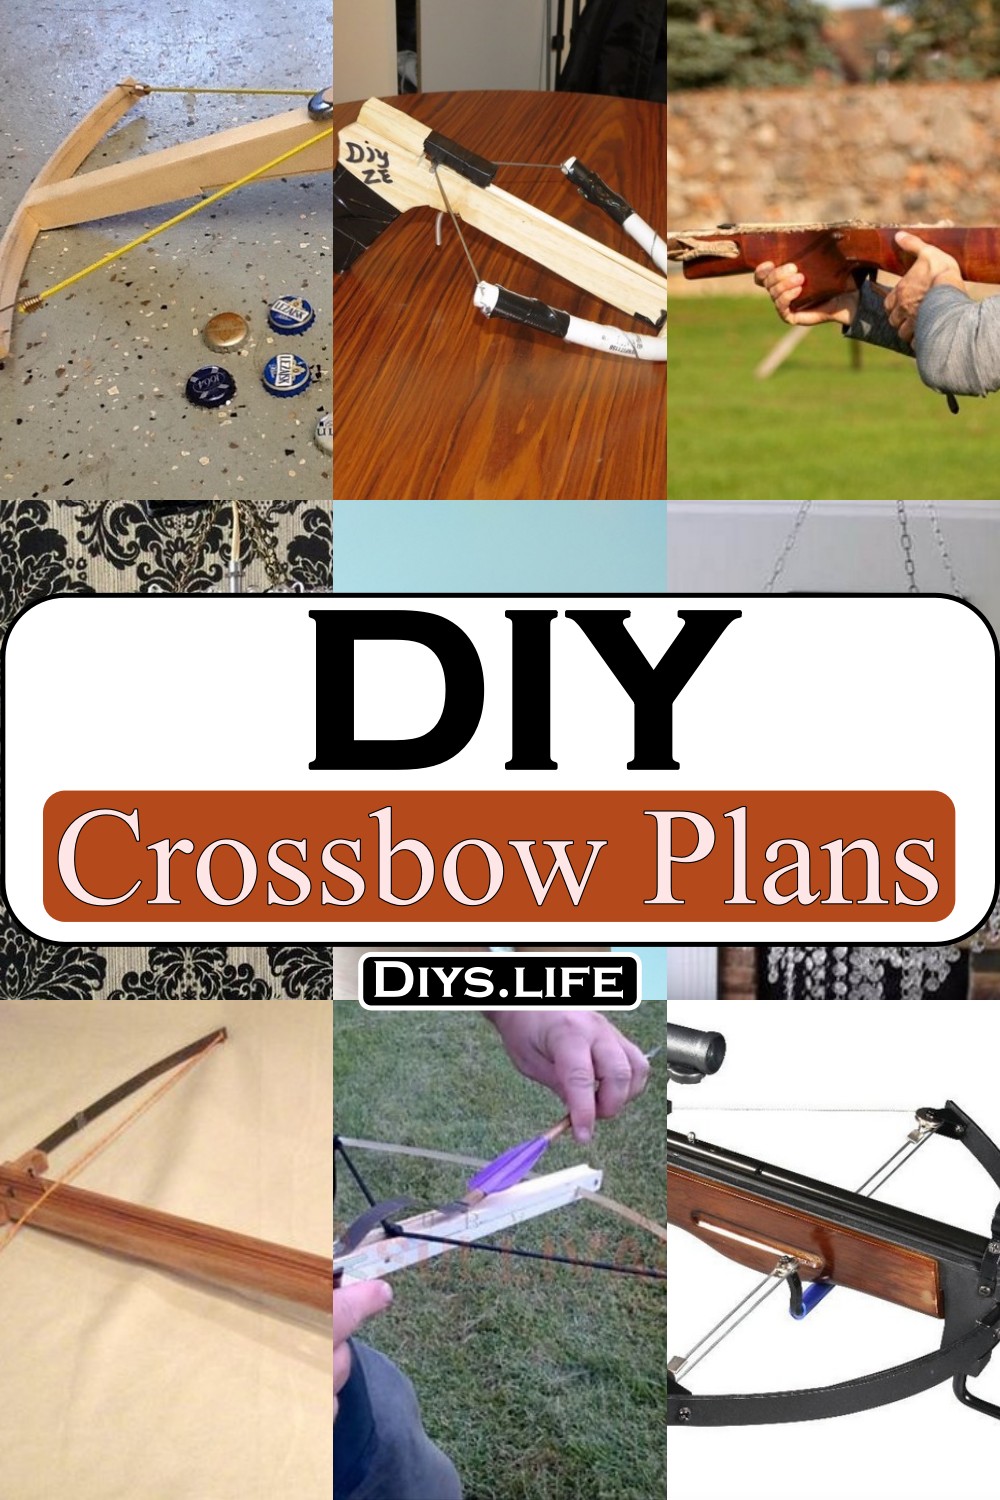 DIY Crossbow Plans